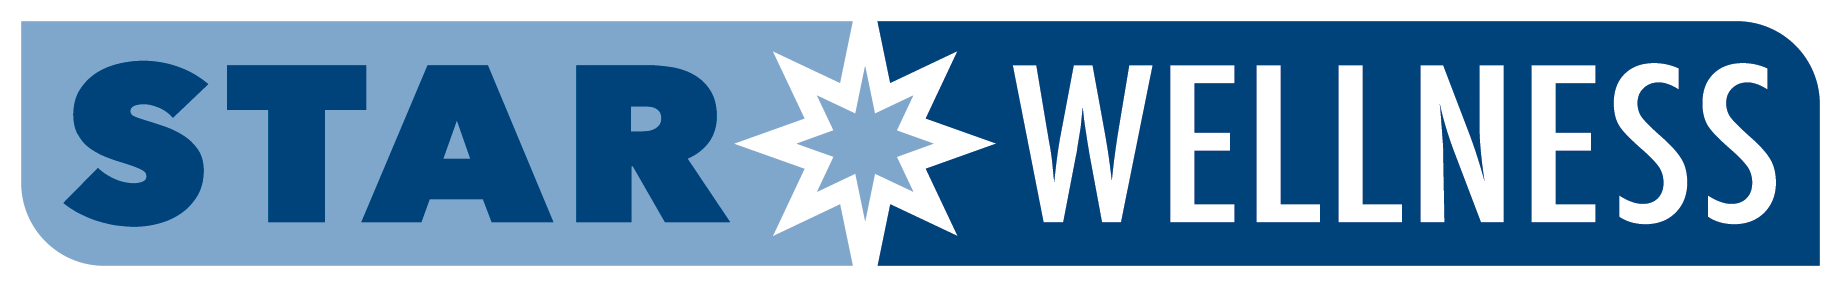 Star Wellness logo